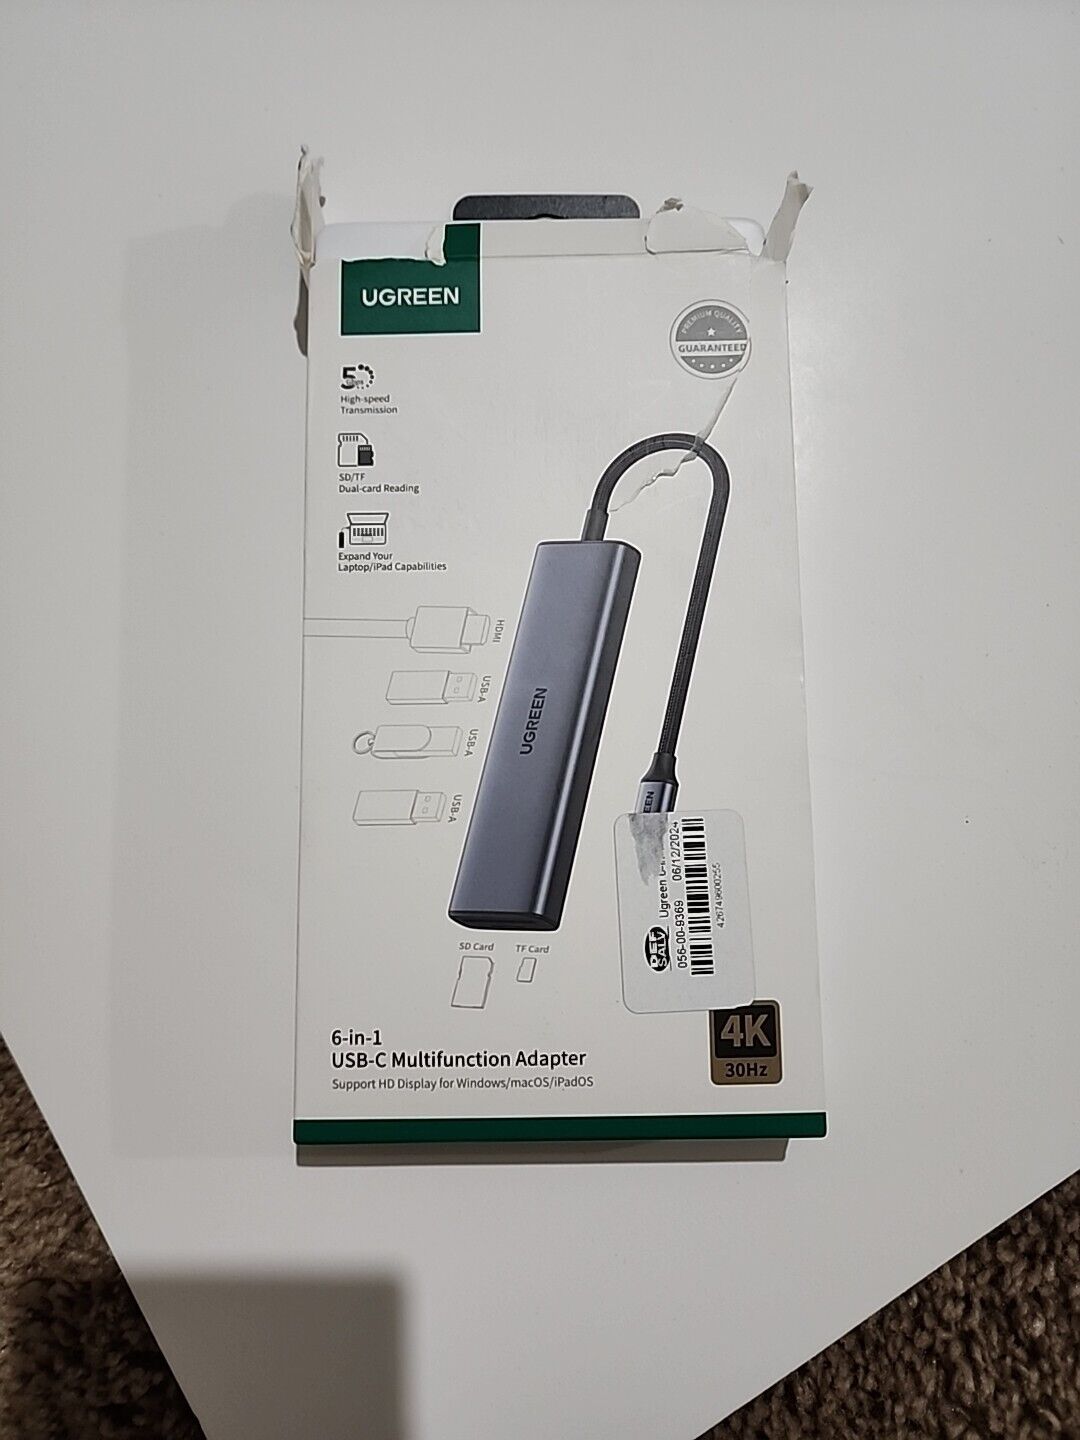 Ugreen USB-C Multifunction Adapter 4K New, Box Opened